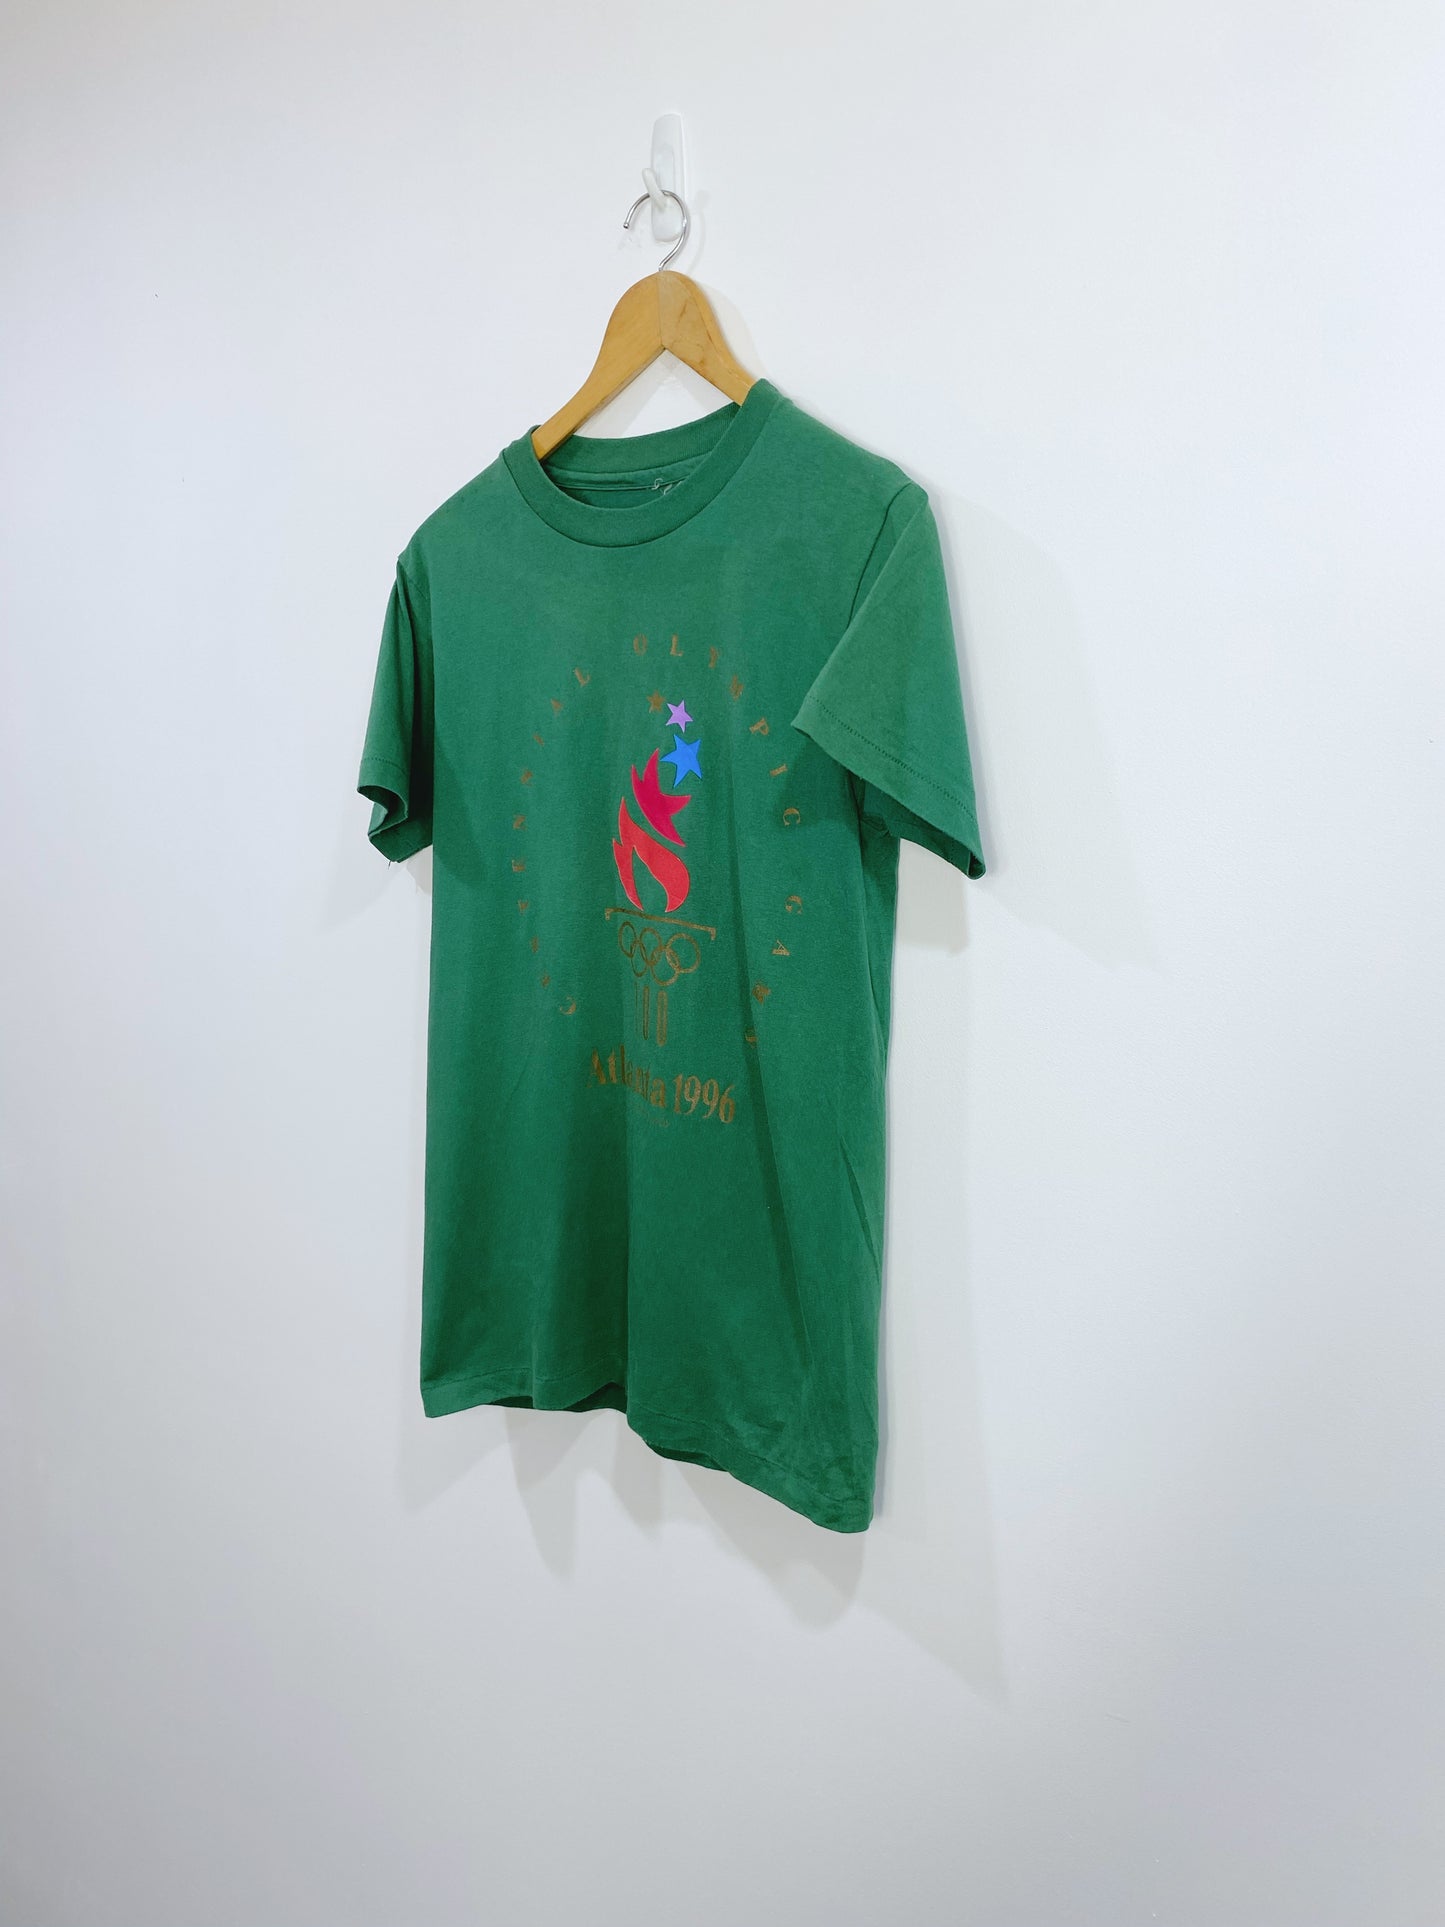 Vintage 1996 Atlanta Olympics T-shirt S